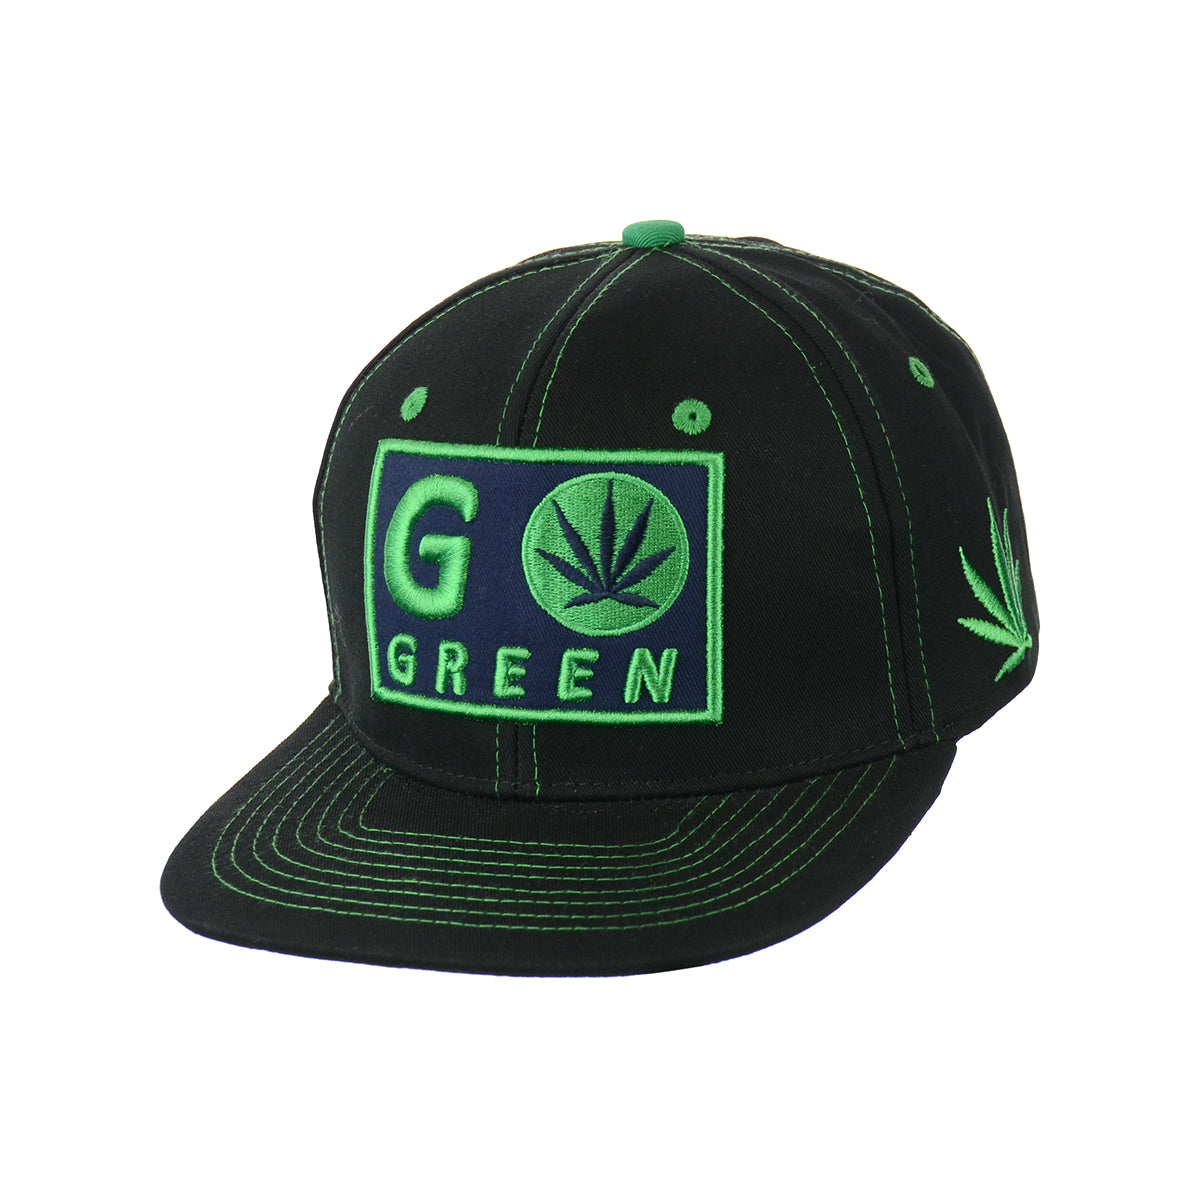 Go Green Leaf Embroidered Snapback Hat 100% Cotton